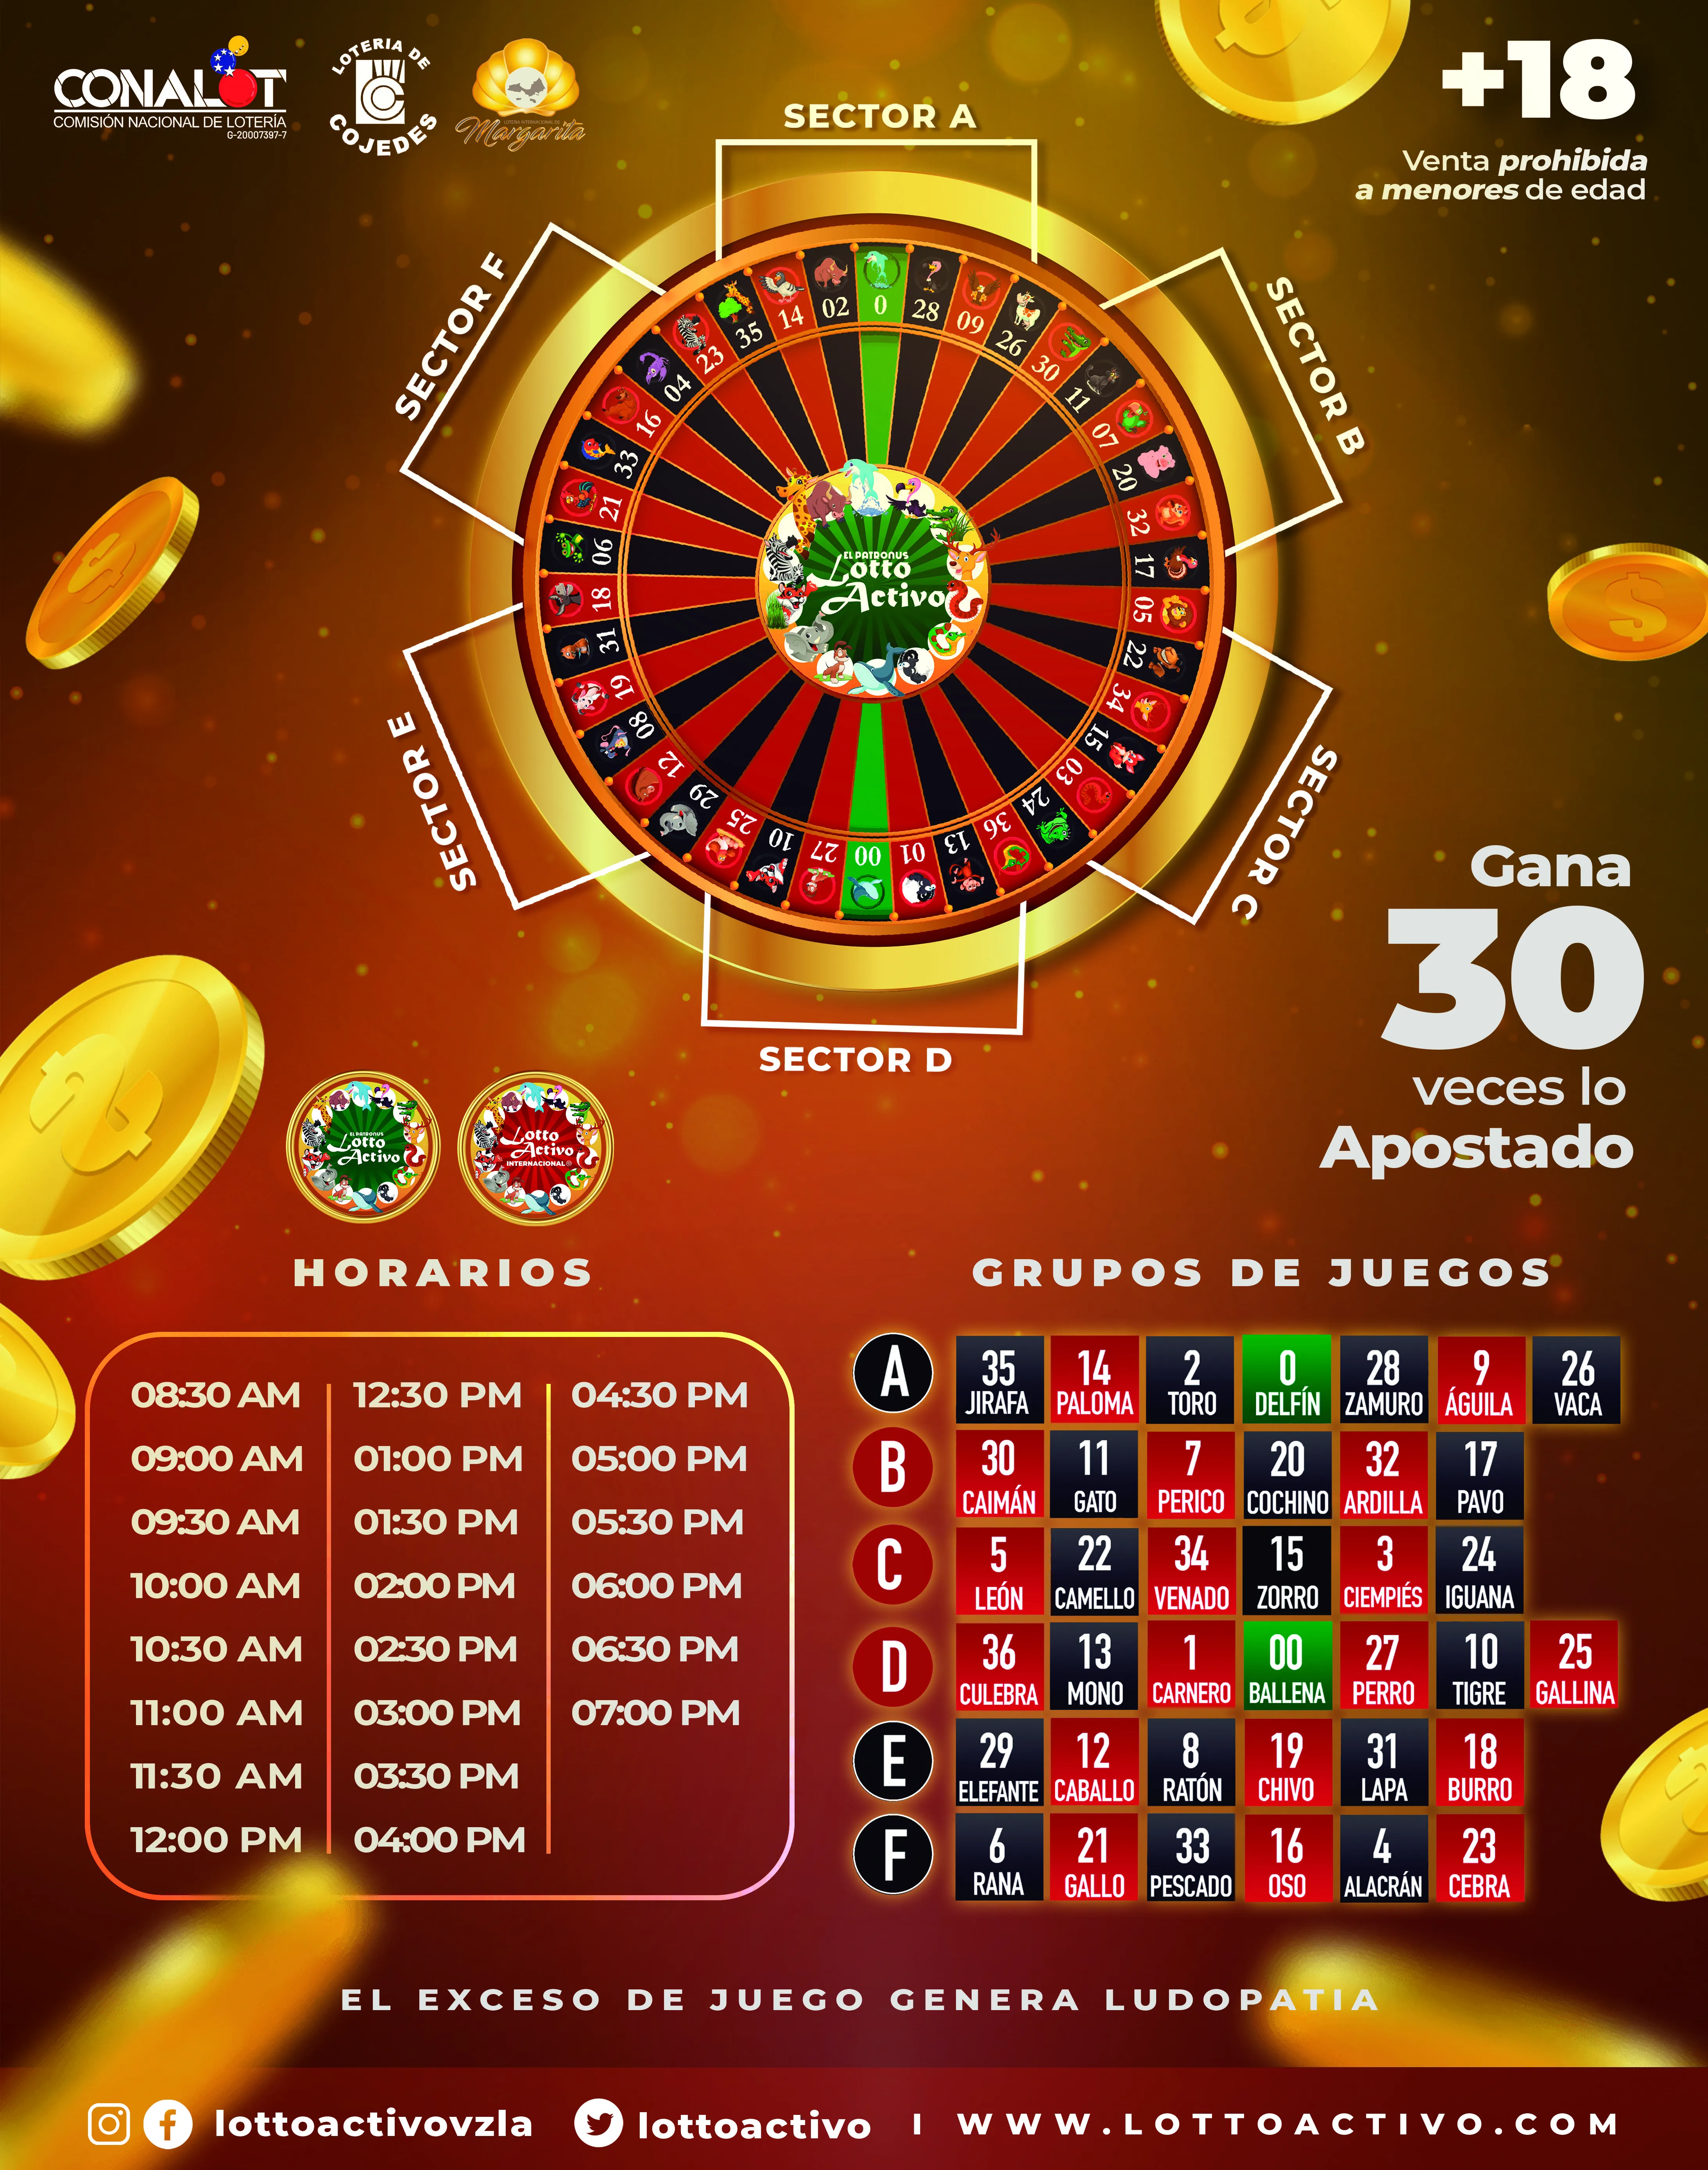 Lotto Activo|Descargas